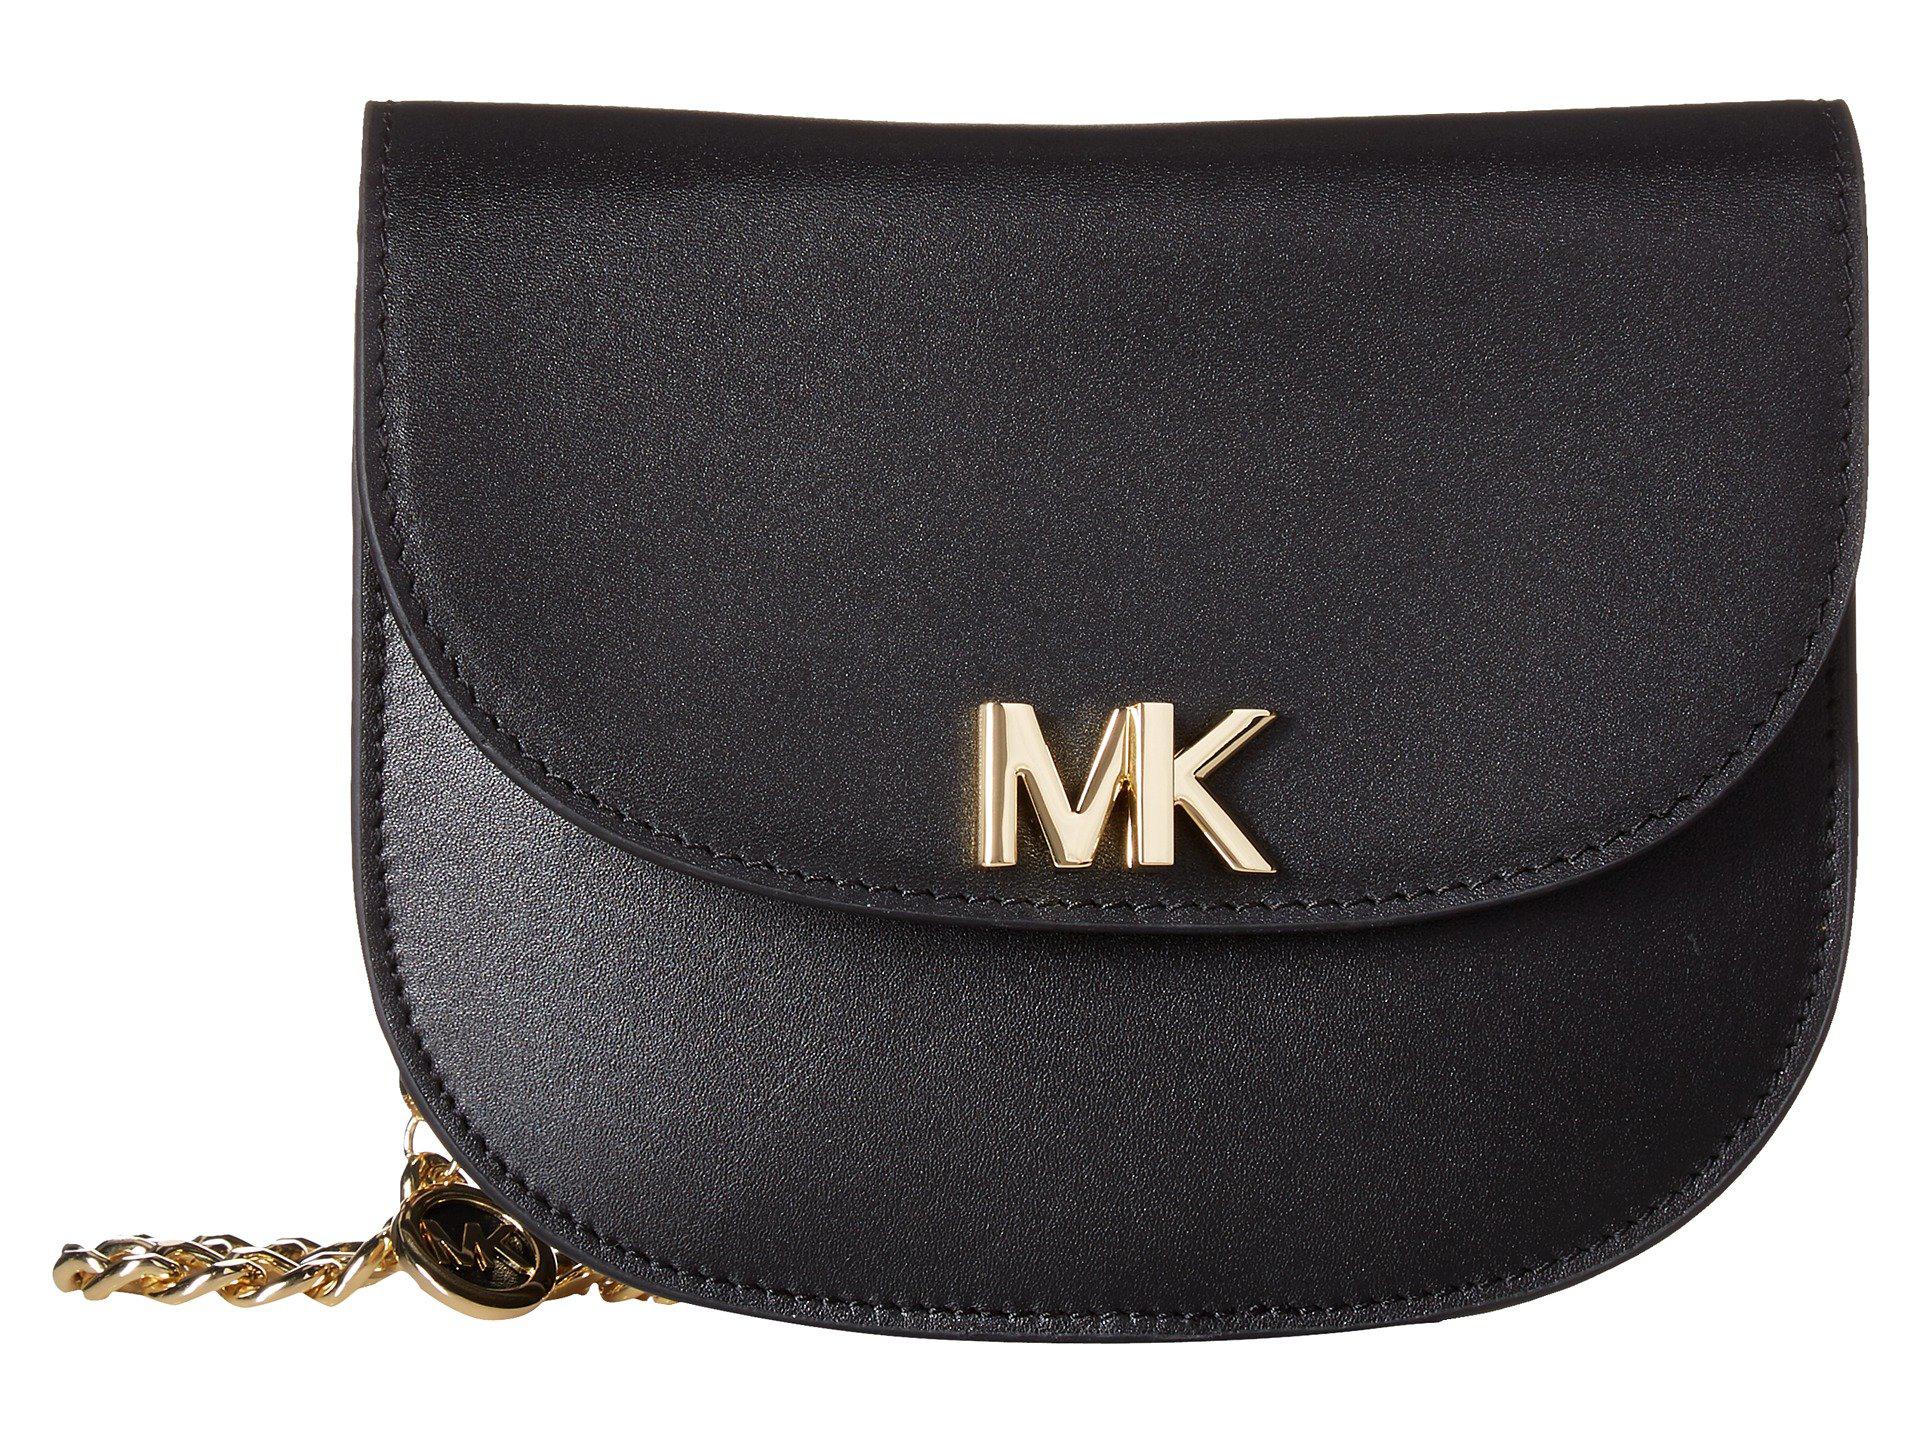 Michael kors Gold chain black purse